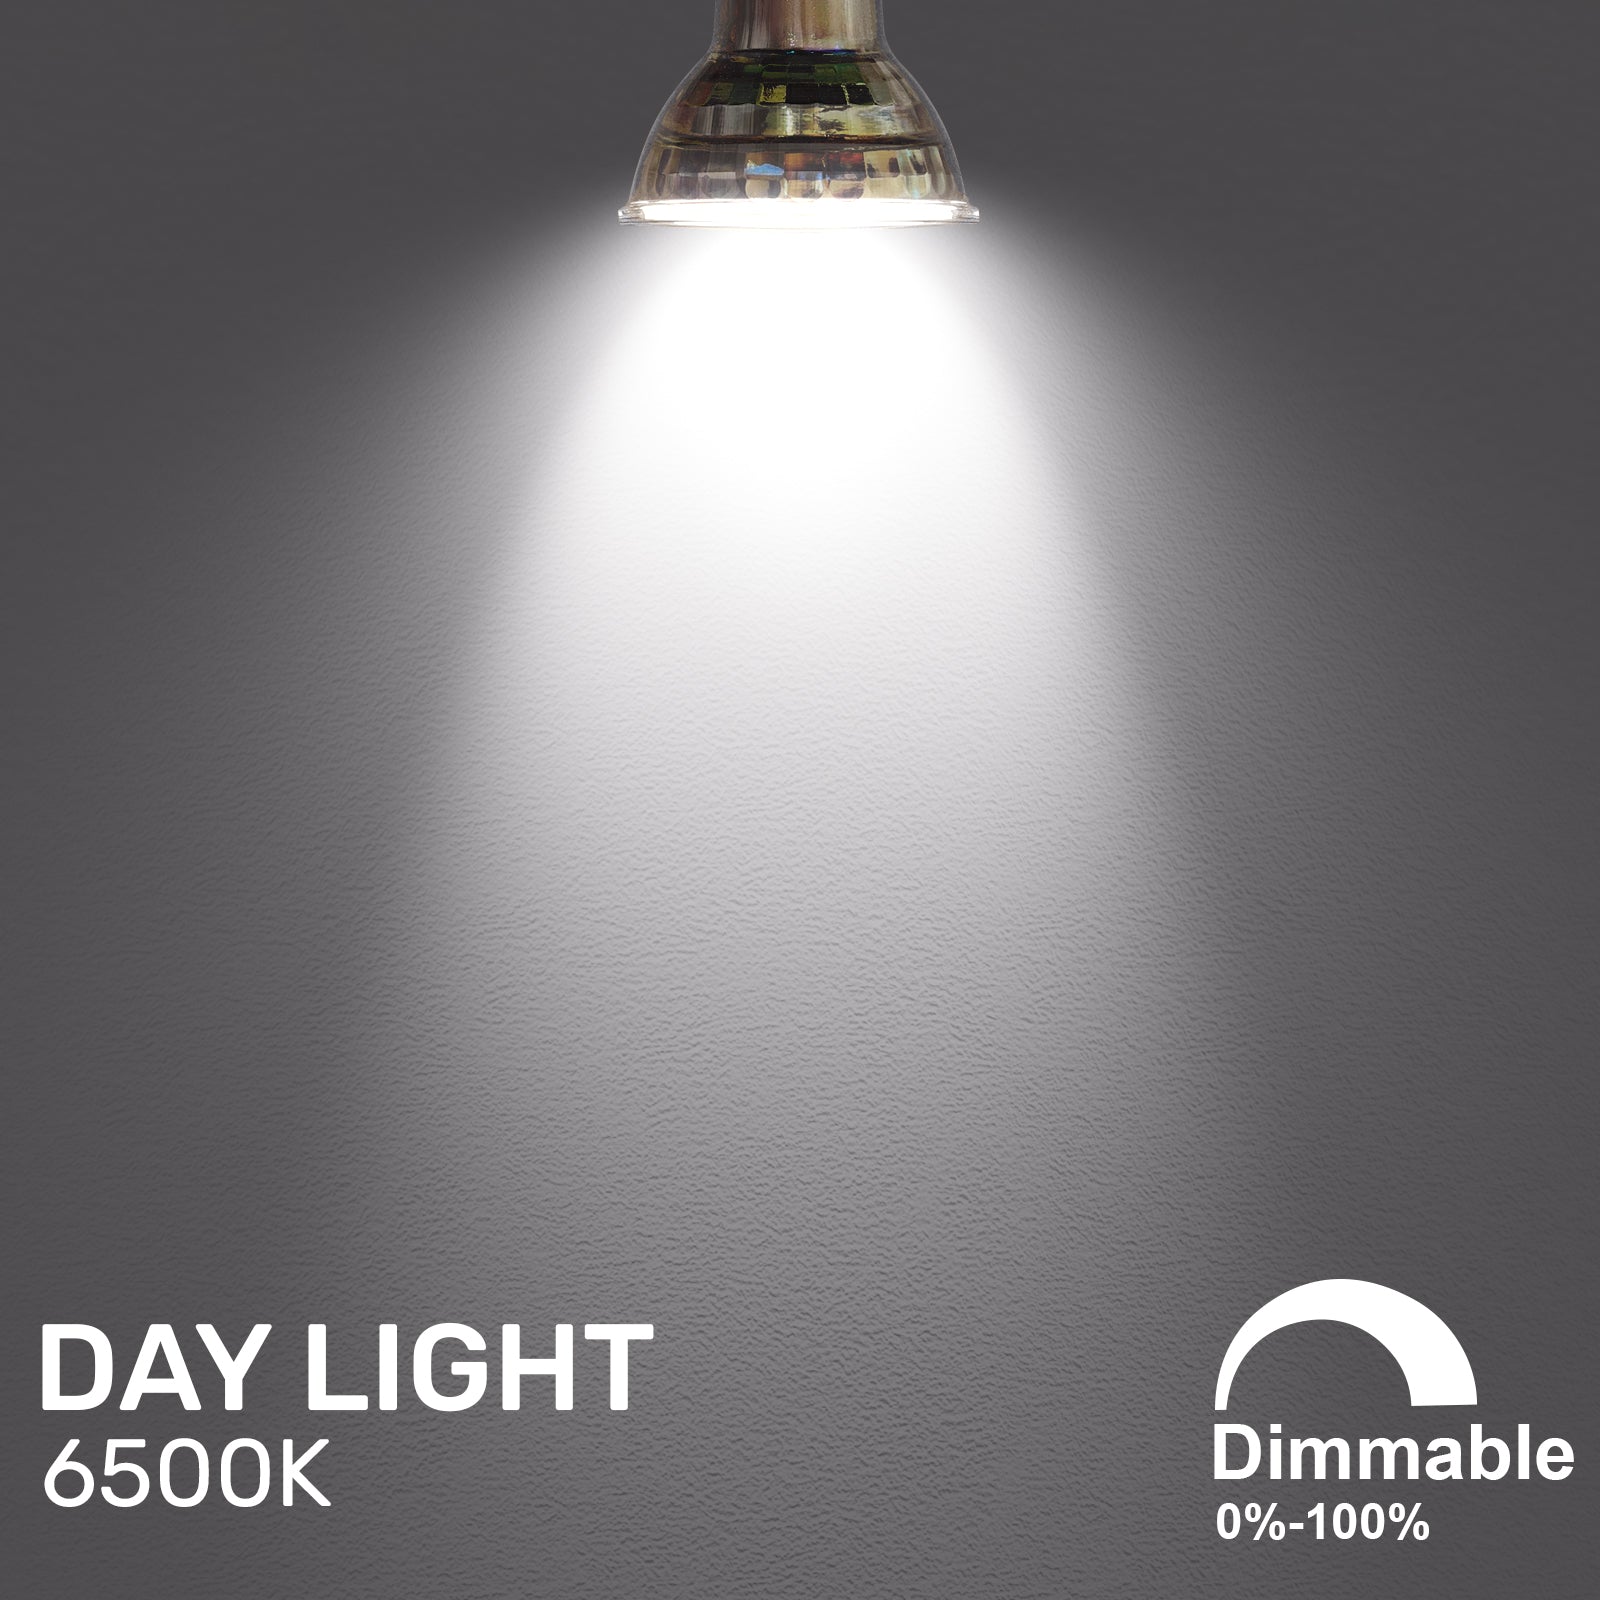 LED Dimmable L006 Spotlight 4.5W (50w), GU10, 345 Lumens, Day Light(6500K), 240V